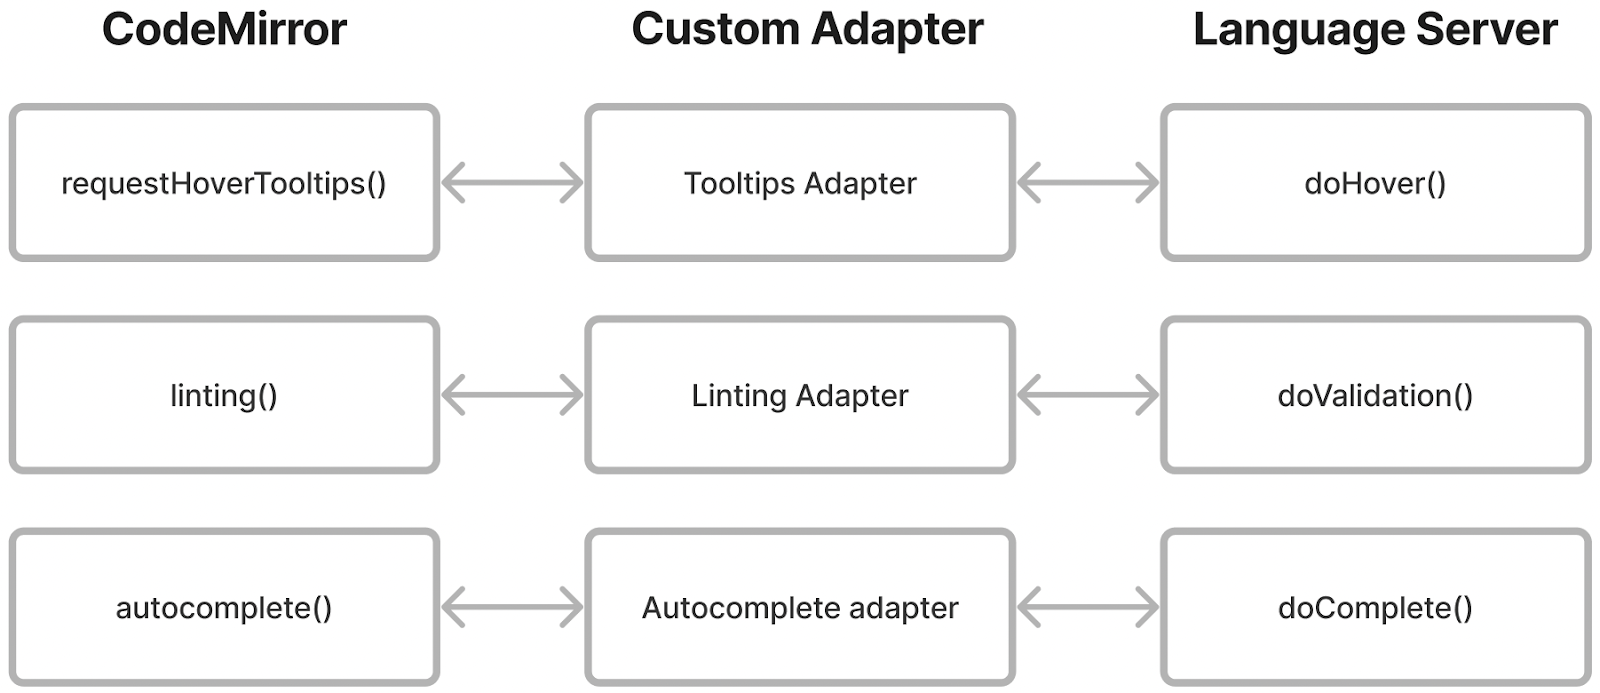 CodeMirror to Custom Adapter to Language Server